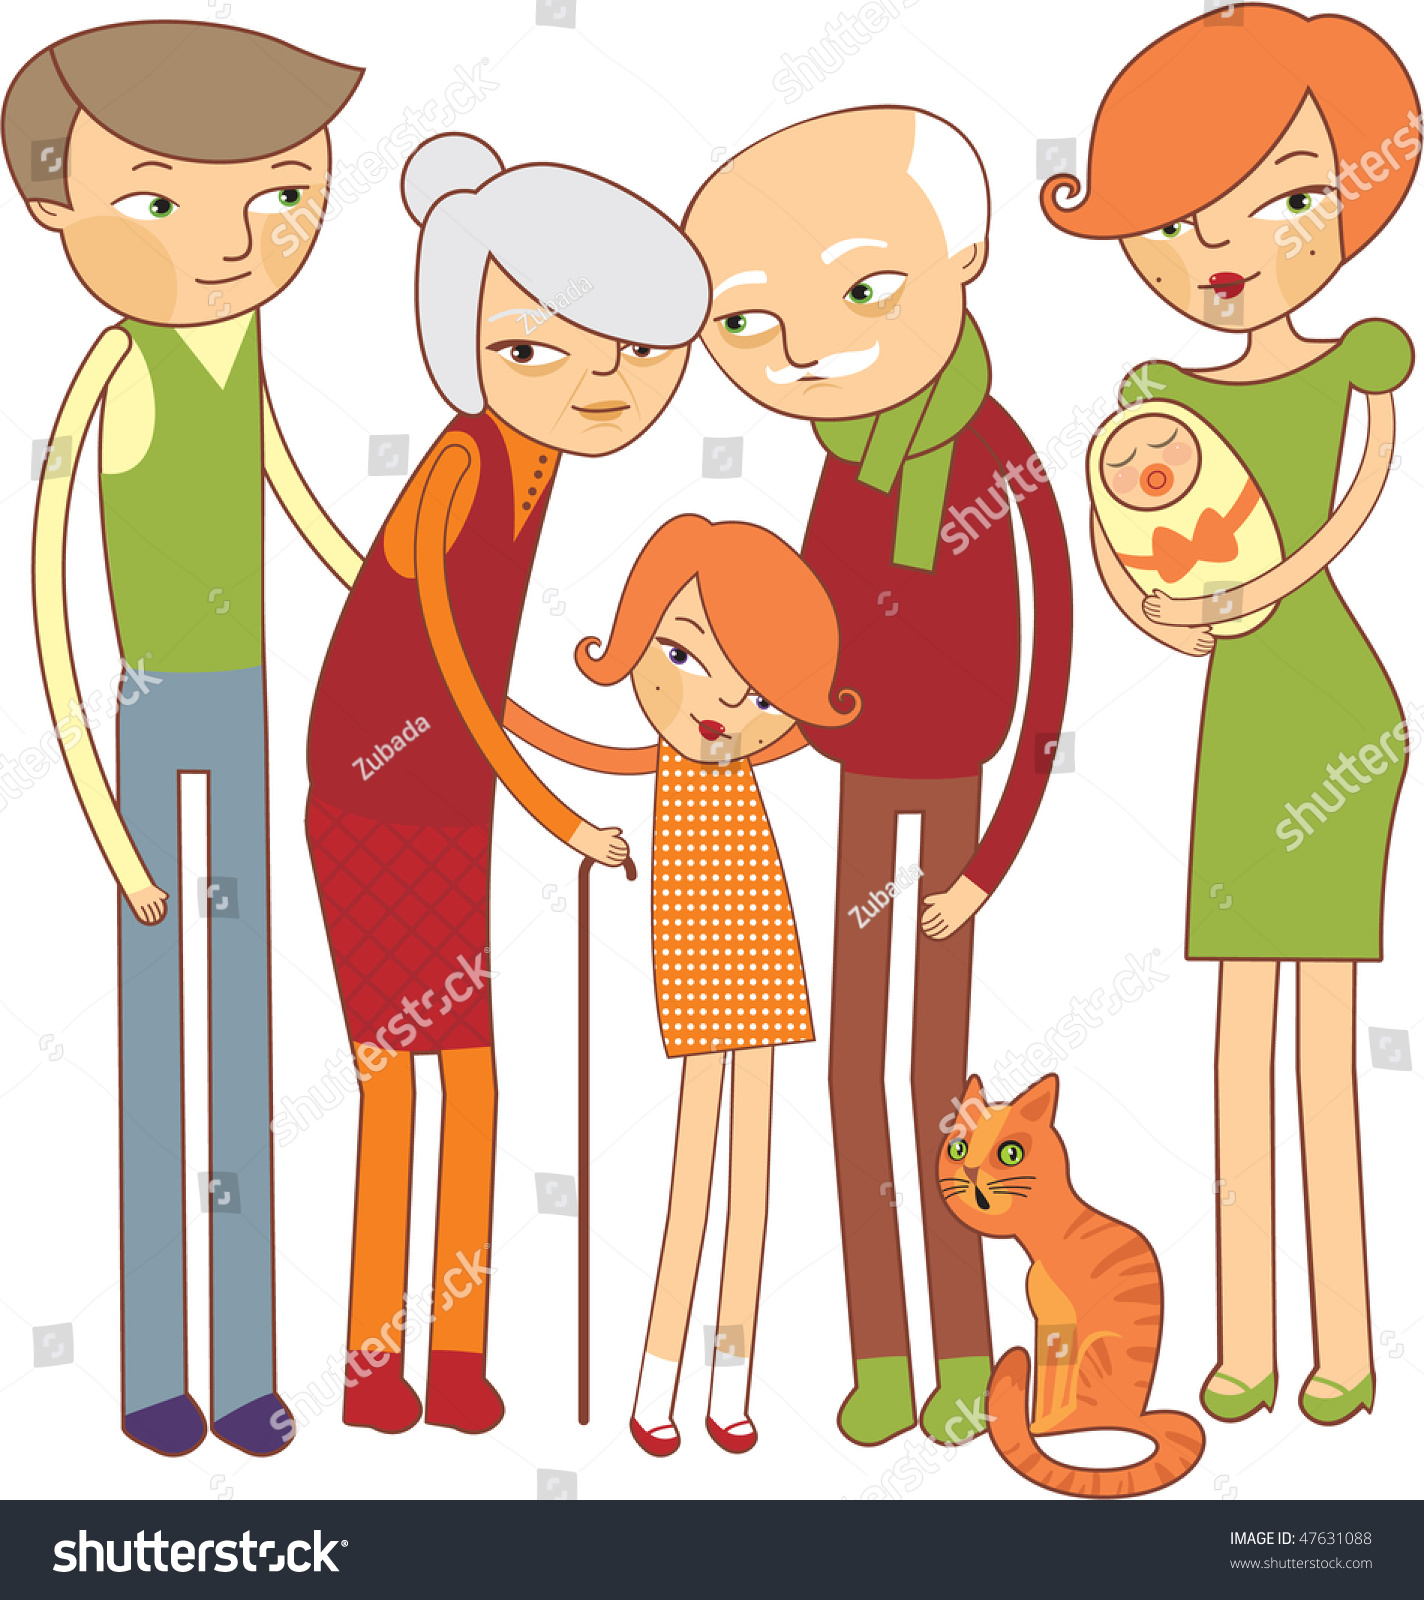 Cartoon Family Portrait Stock Vector Illustration 47631088 : Shutterstock